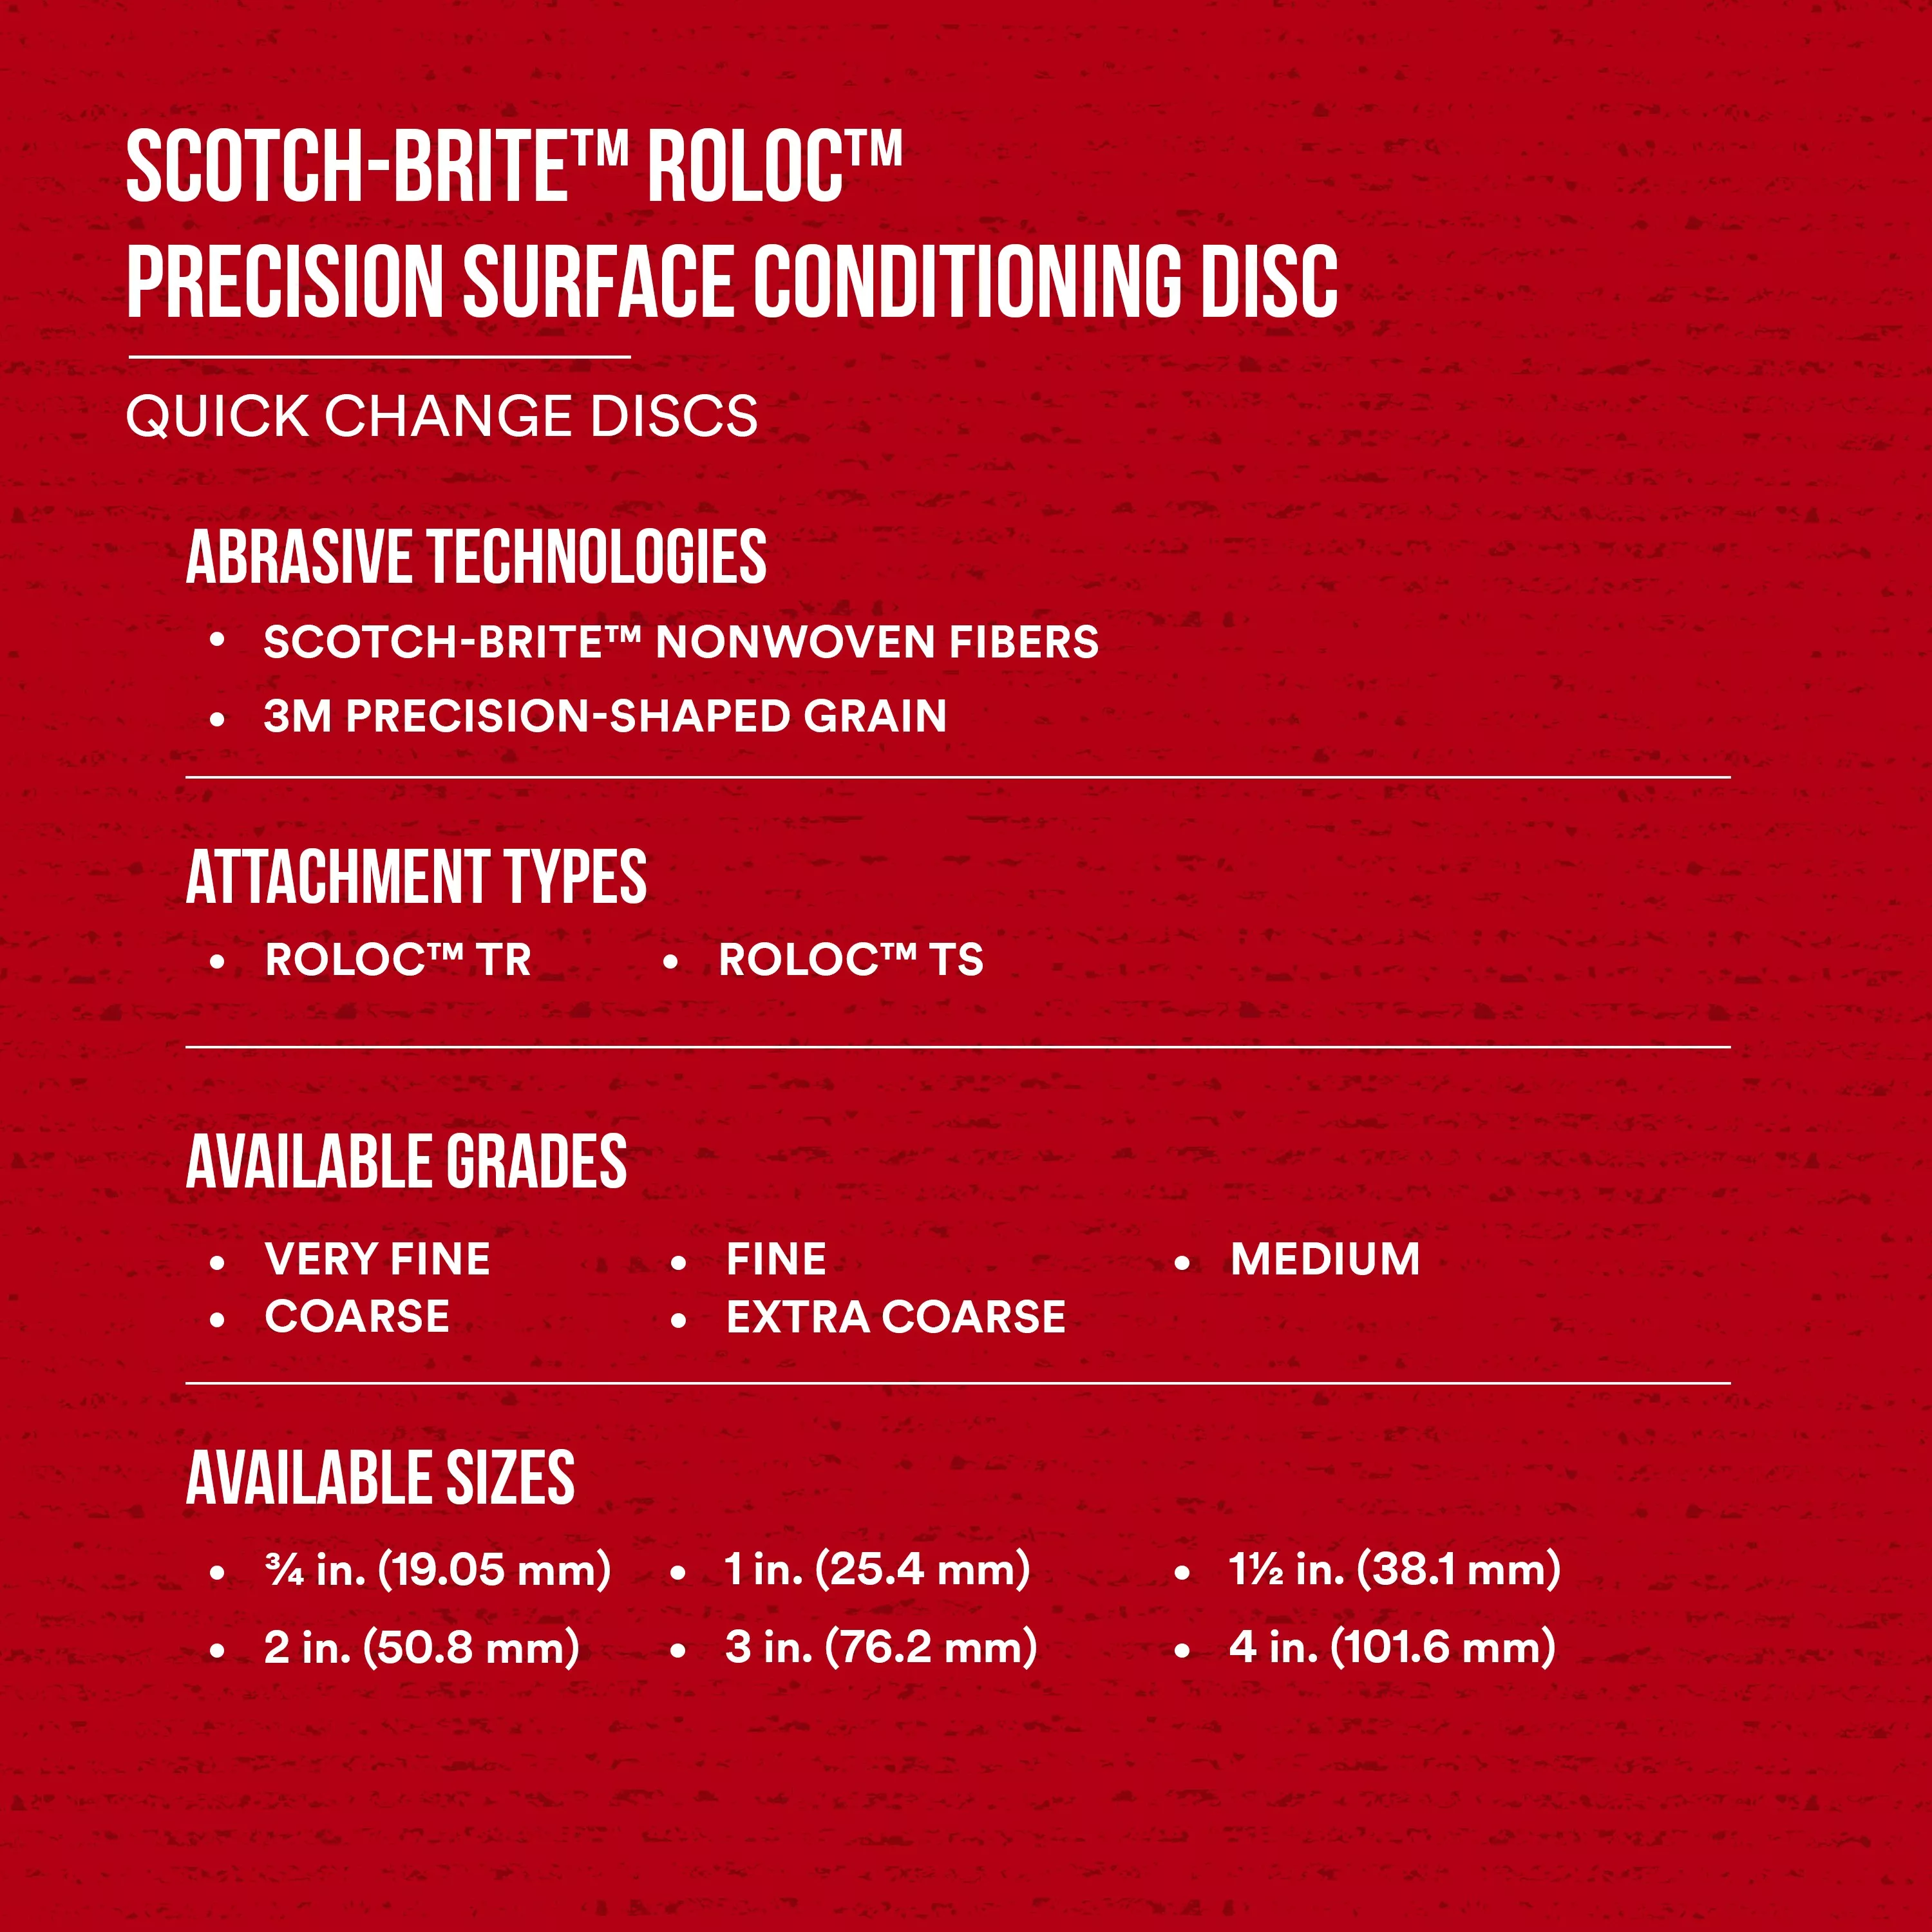 SKU 7100264665 | Scotch-Brite™ Roloc™ Precision Surface Conditioning Disc